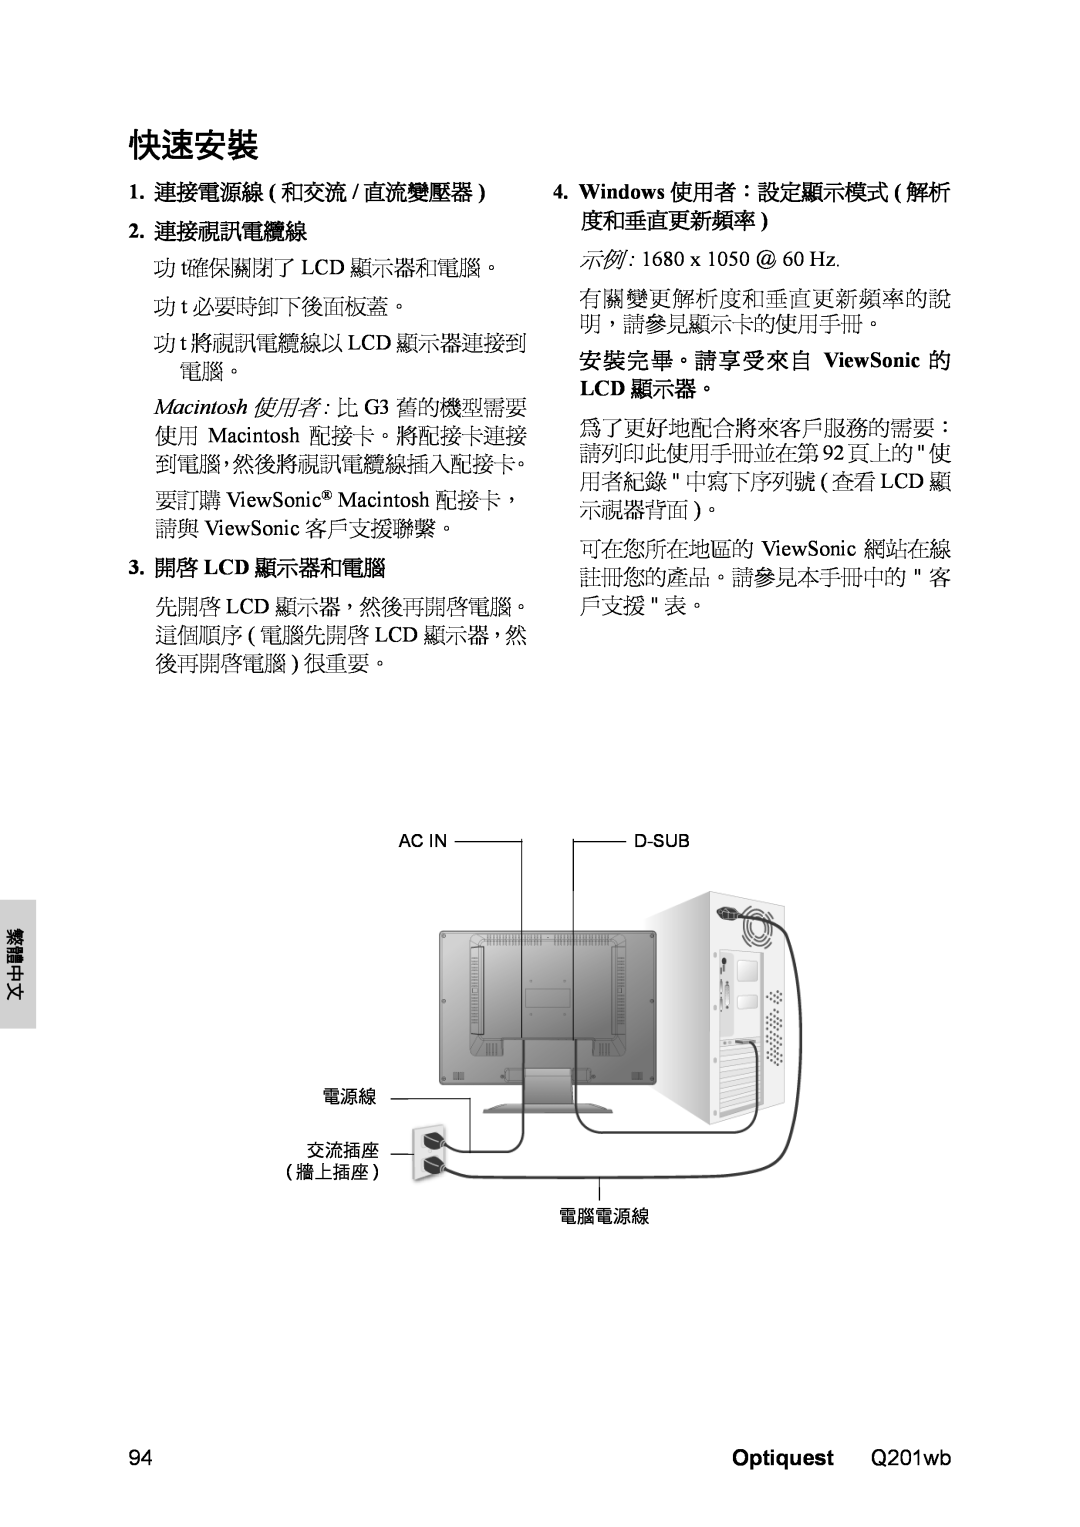 Optiquest VS12106 快速安裝, 要訂購 ViewSonic Macintosh 配接卡，, 示例 1680 x 1050 ＠ 60 Hz, Ac In, 繁體中文, 電源線 交流插座 牆上插座, D-Sub, 電腦電源線 